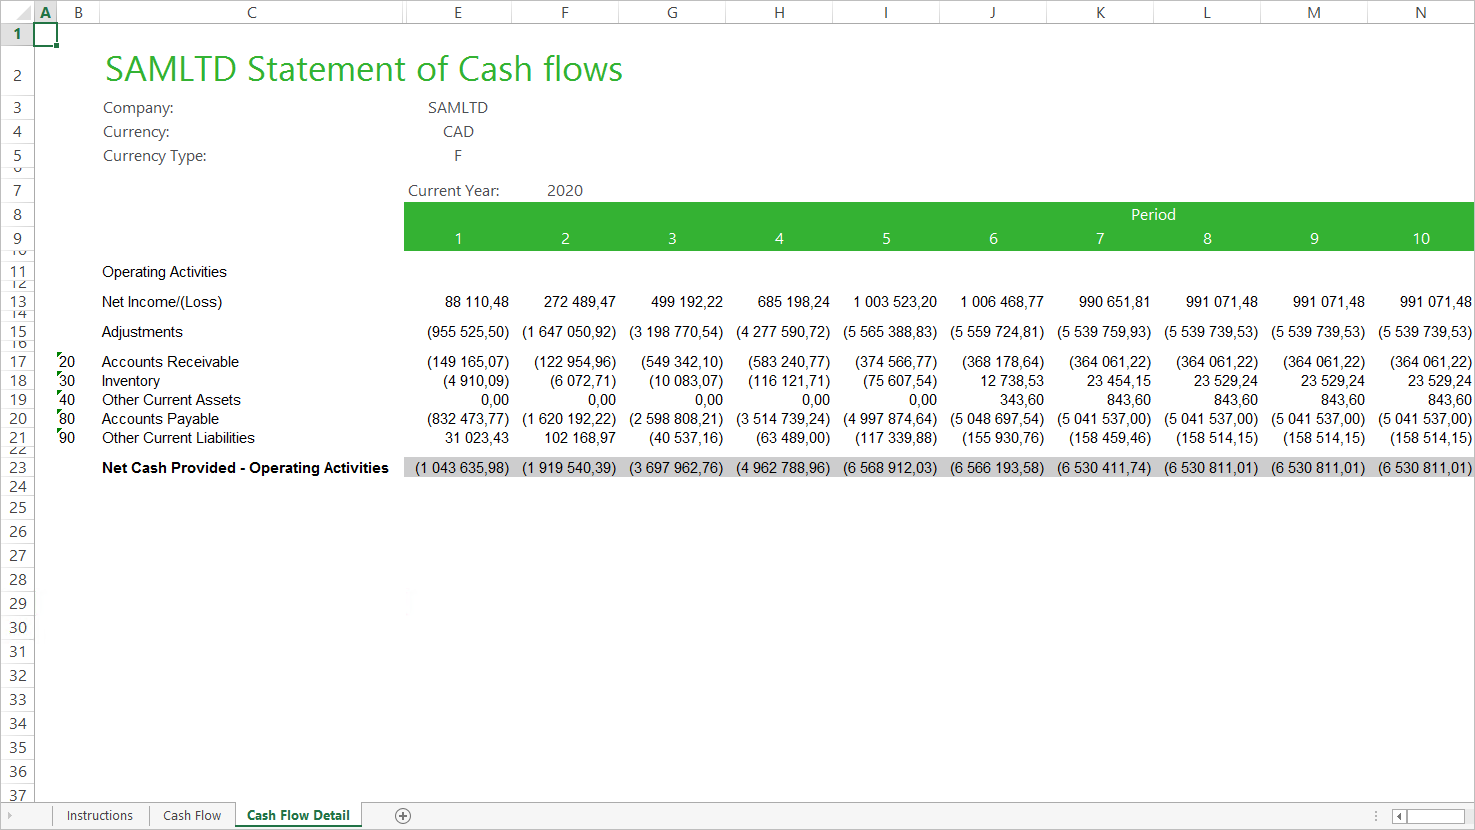 Cash Flow Forecasts